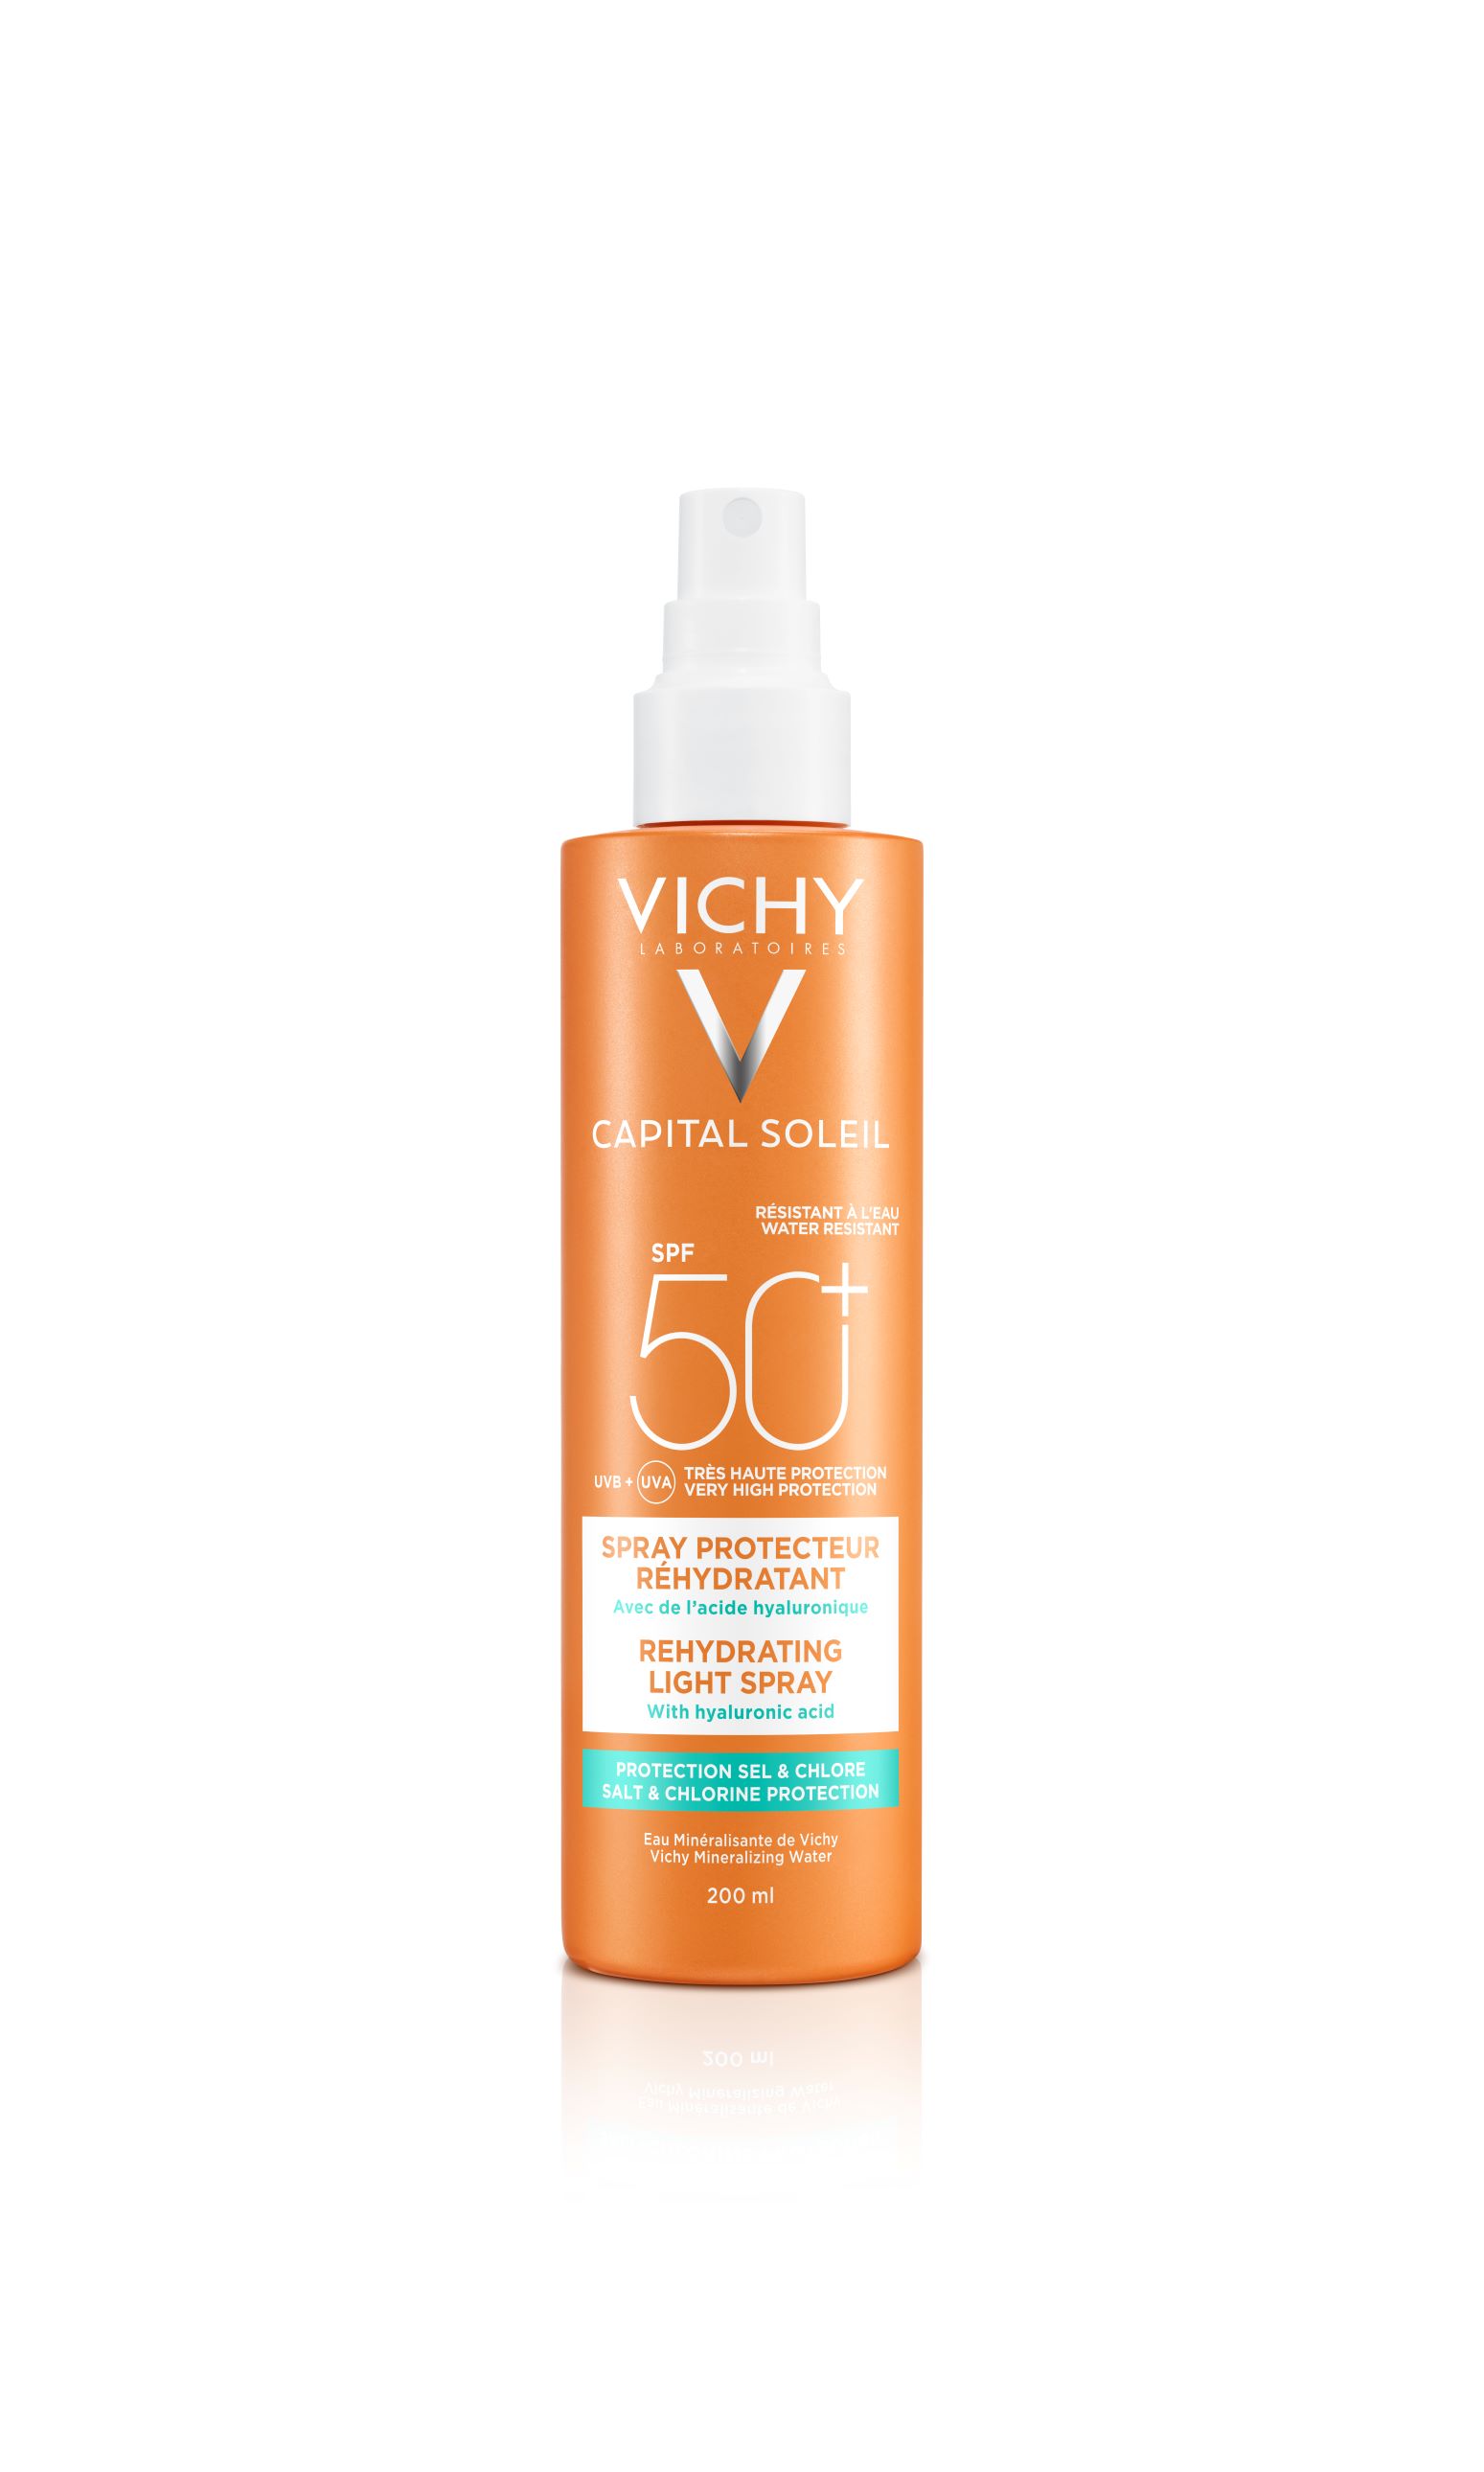 Vichy Capital Soleil SPF50 Beach spray